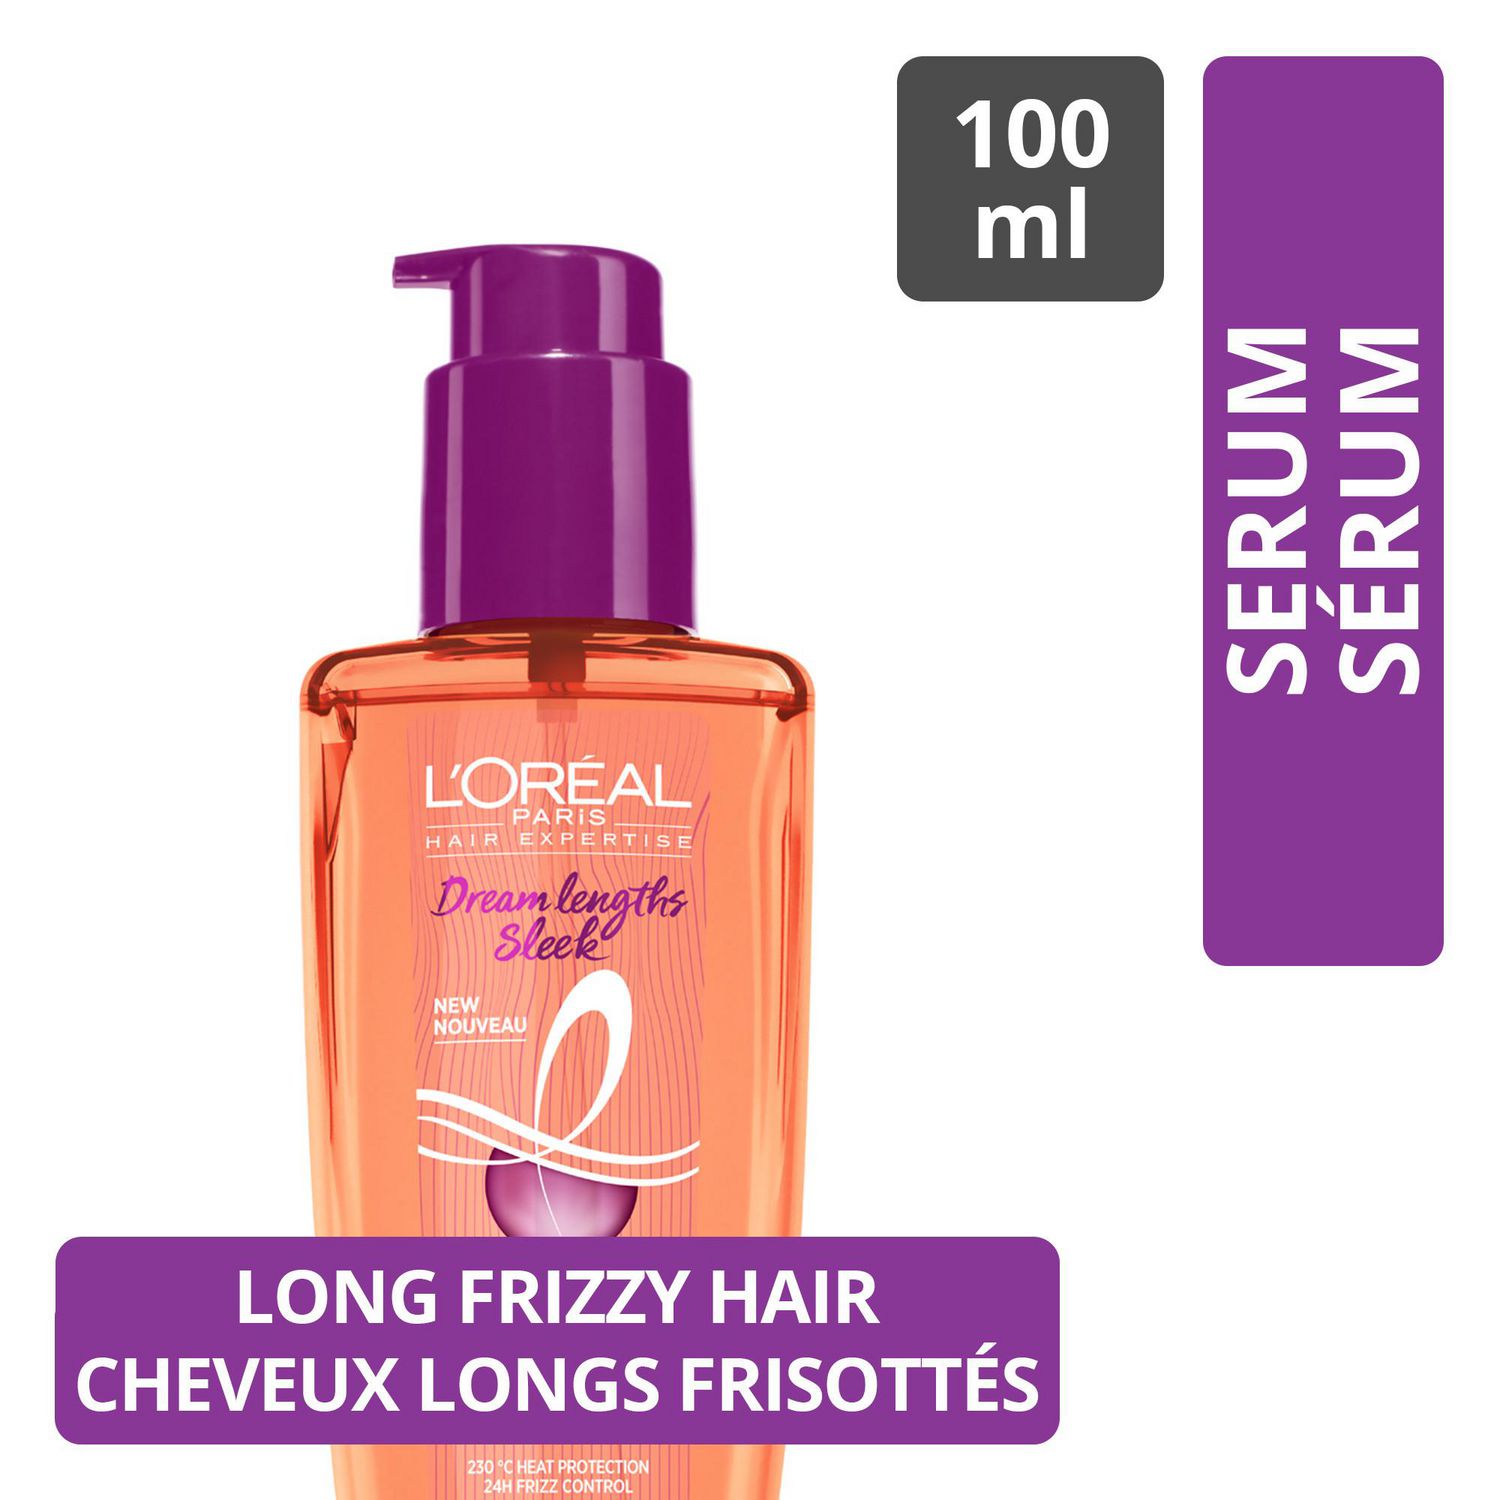 L'Oreal Paris Hair Expertise Dream Lengths Sleek Frizz Eraser Serum |  Walmart Canada